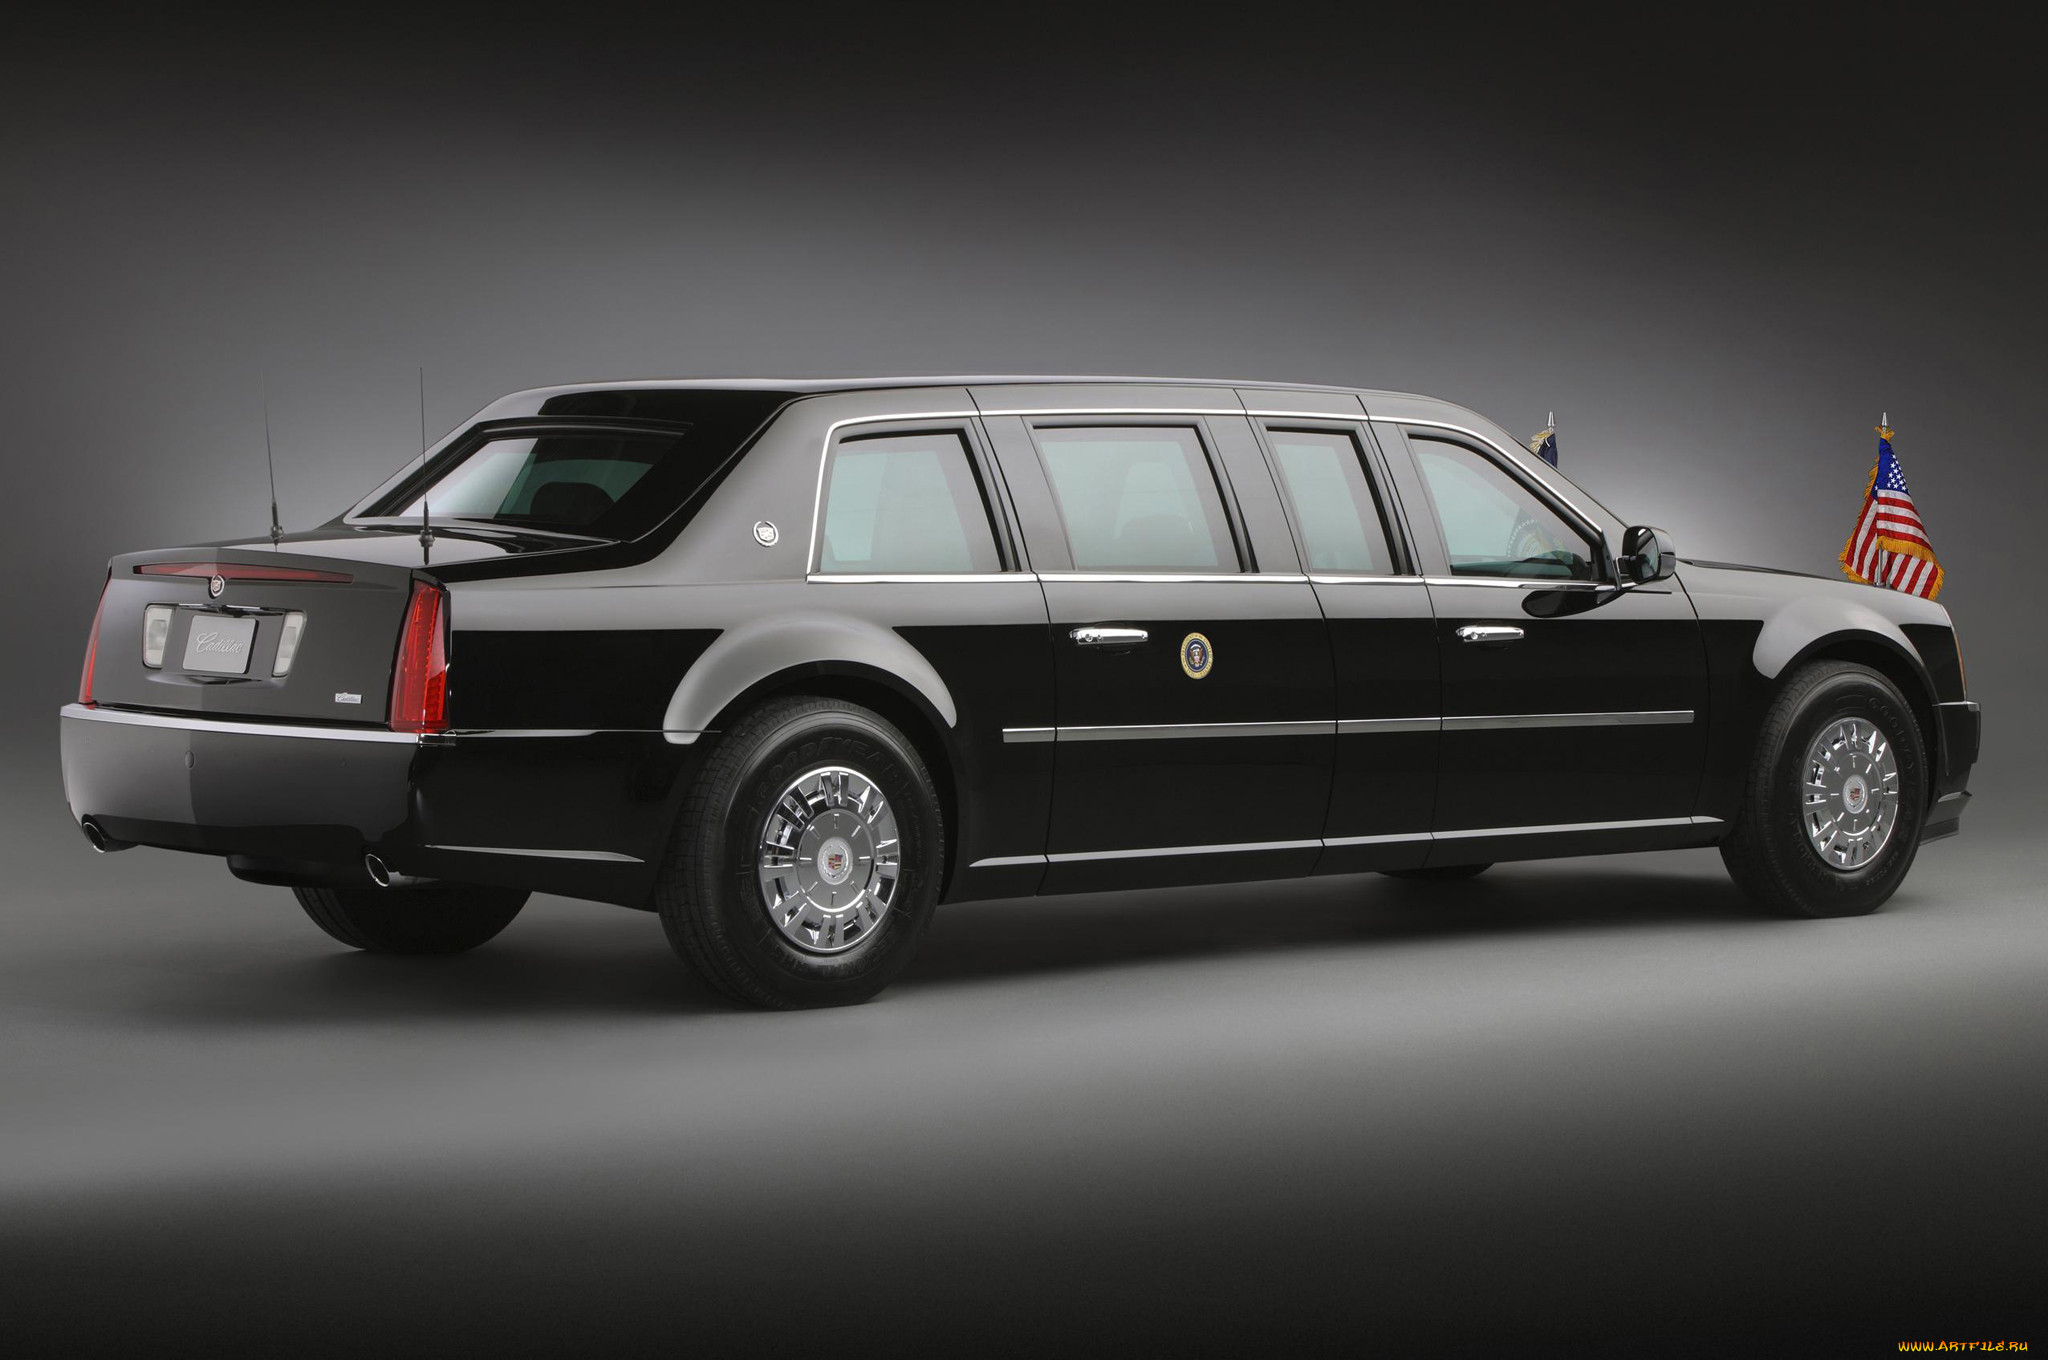 cadillac one barack obama`s new presidential limousine 2009, , cadillac, limousine, 2009, presidential, new, obama, barack, one